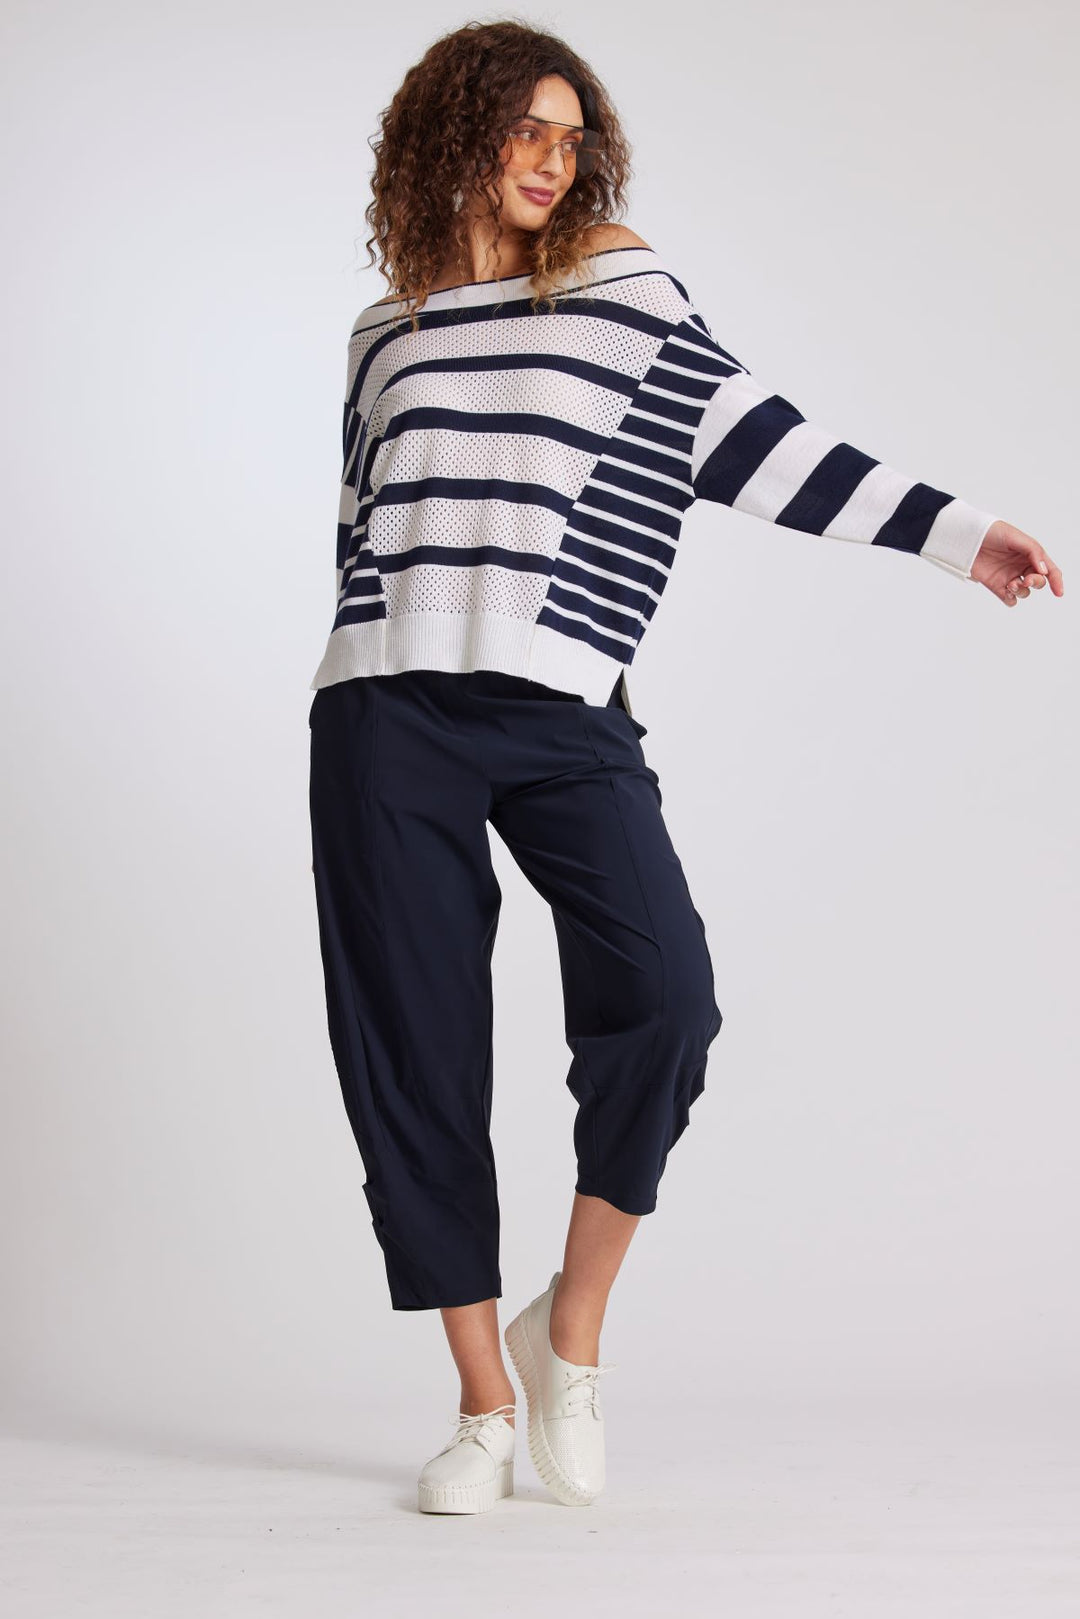 Stripe Boat Neck Sweater (Black/White)